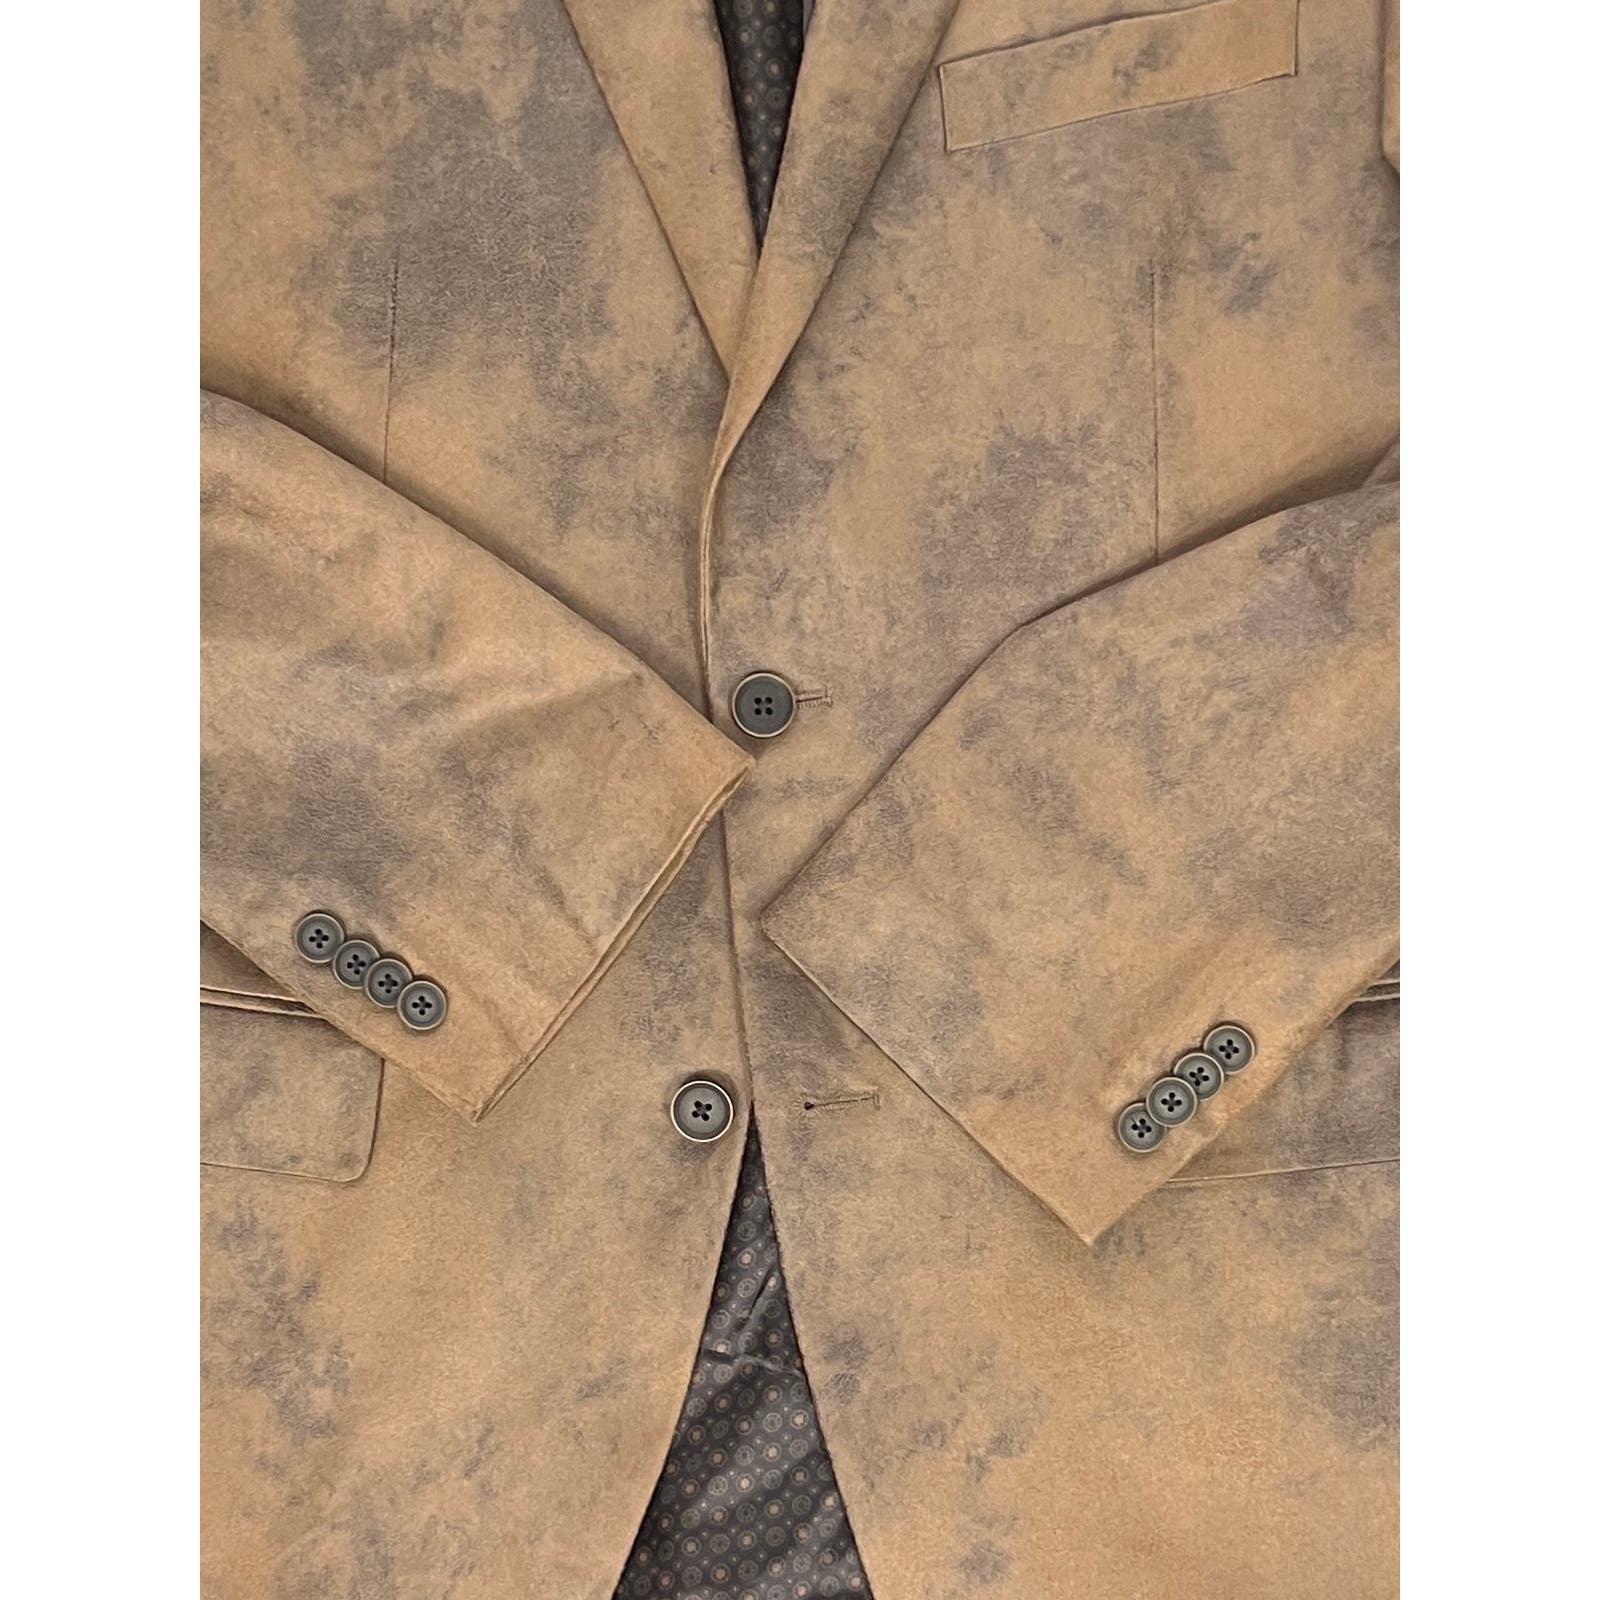 Michael Kors Men's Sport Coat 40R Distressed Faux Leather Blazer Jacket Brown